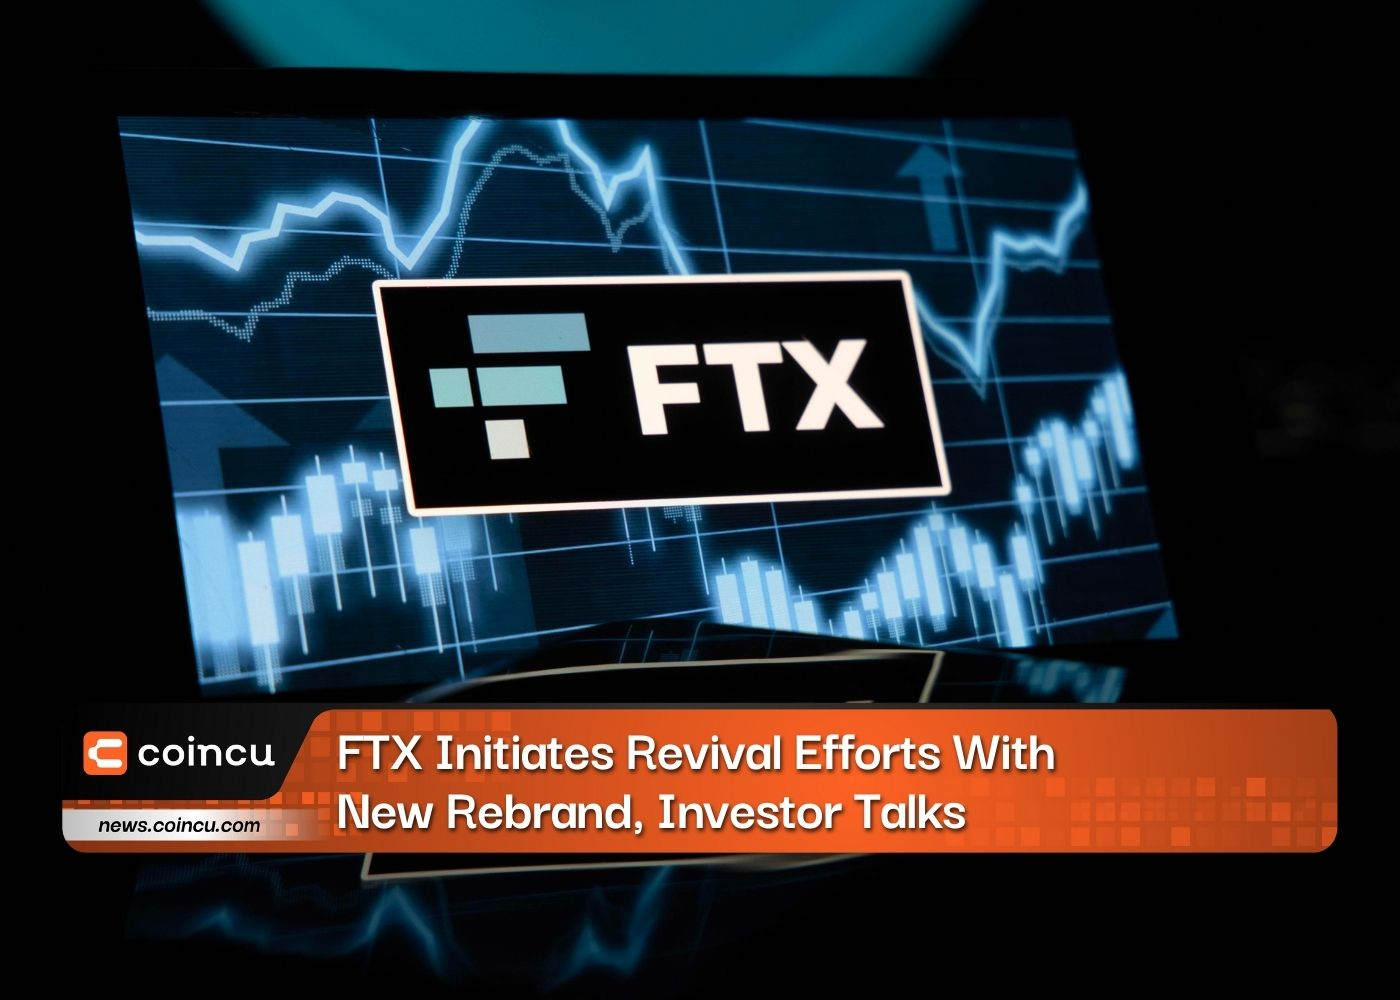 BREAKING: FTX Initiates Revival Efforts With New Rebrand, Investor Talks